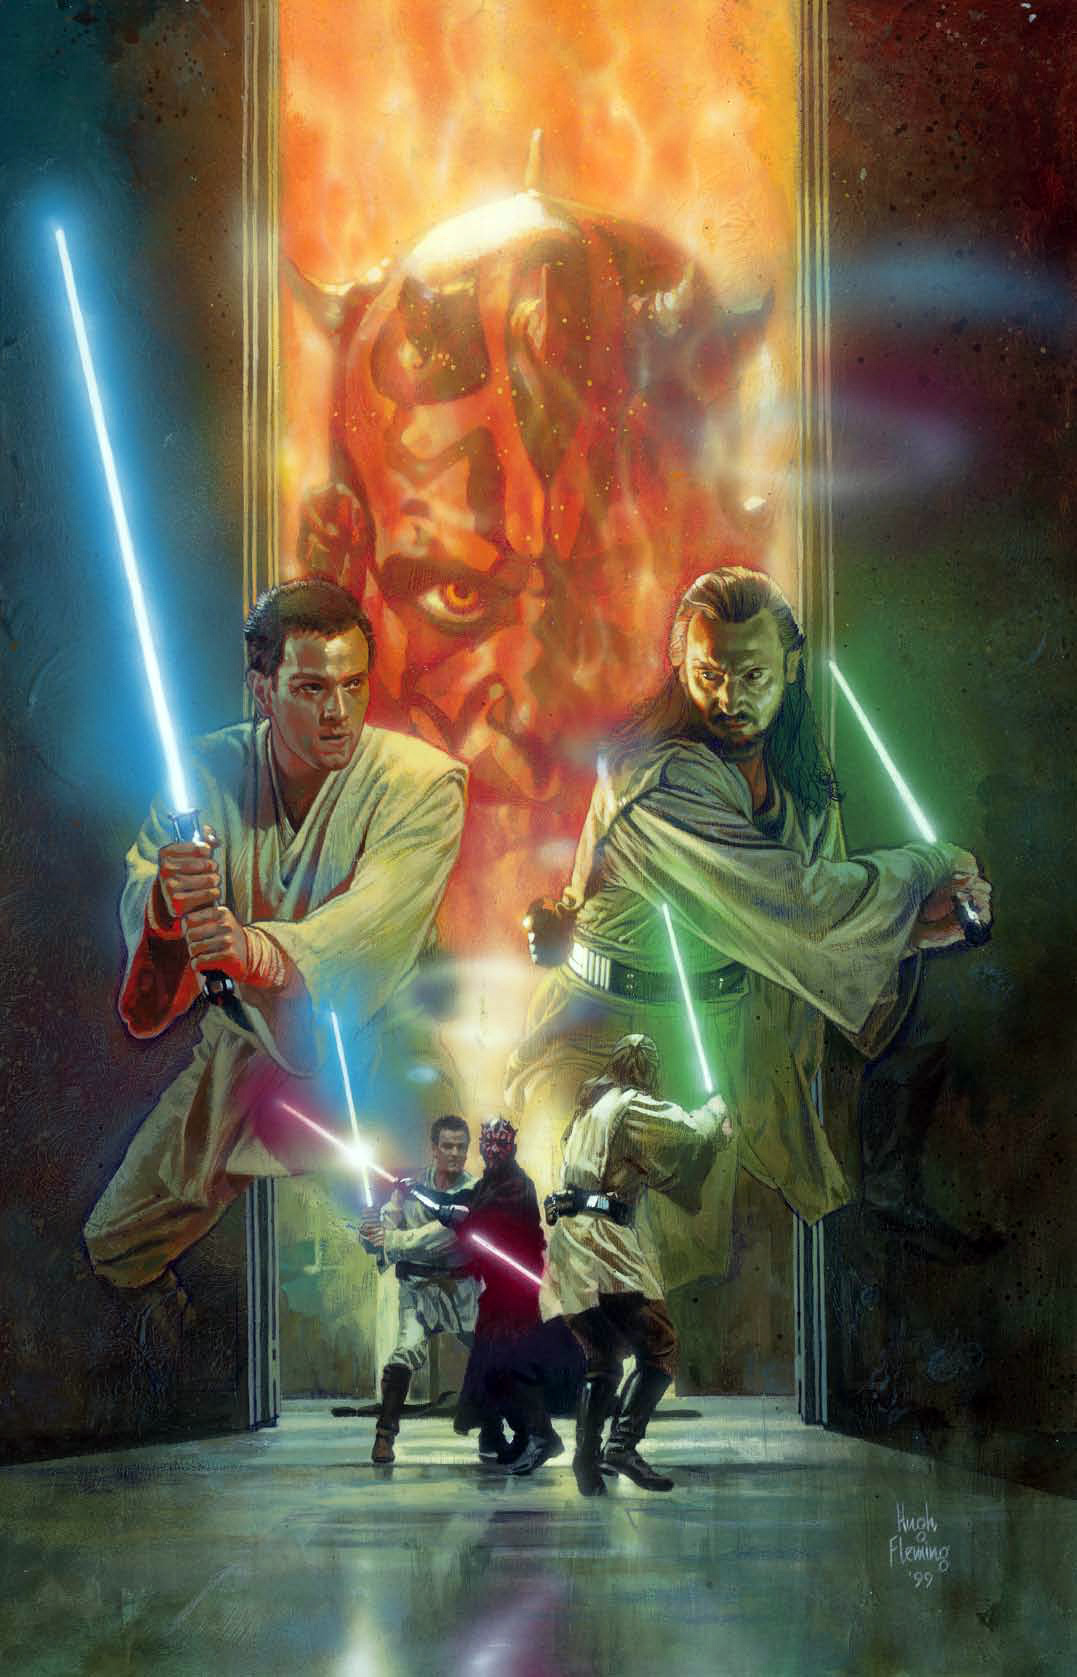 Звездные войны дуэль. Джедай Звездные войны эпизод 1. Star Wars Obi Wan Постер. Obi Wan Kenobi vs Darth Maul. Джедай из Звездных войн 1 эпизод.